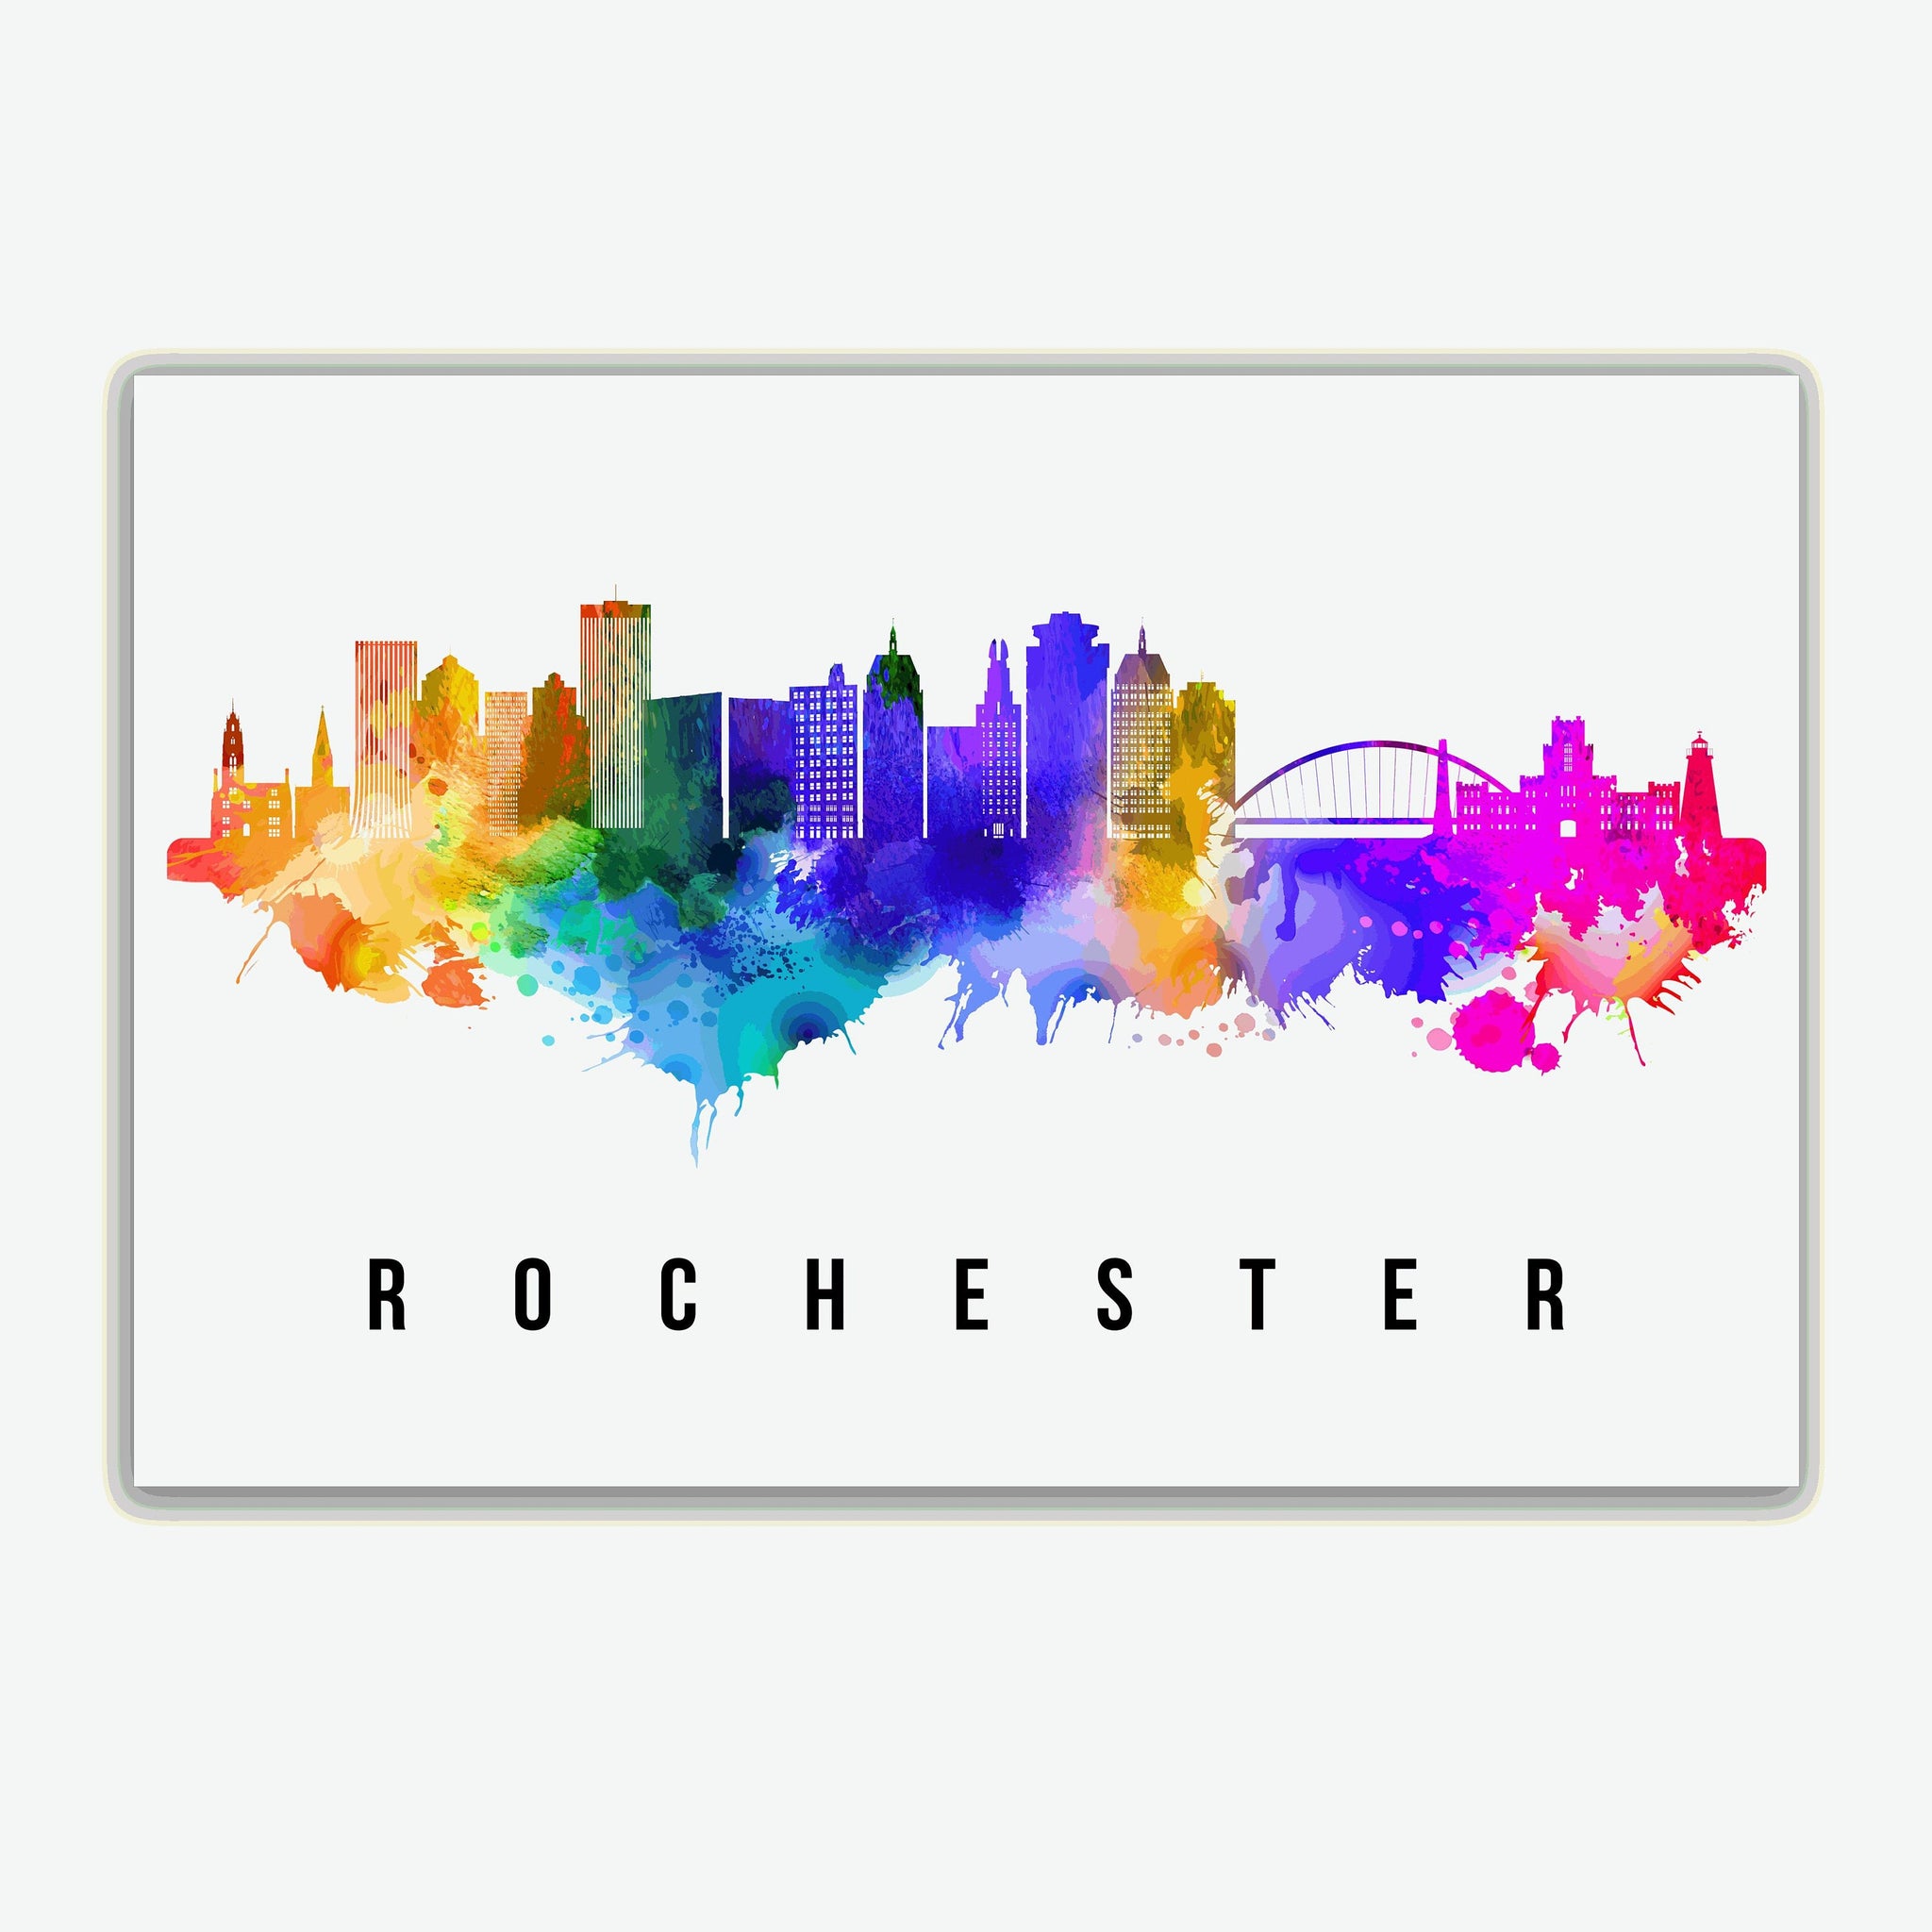 Rochester Skyline New York  Poster, New York  Cityscape Painting, Rochester New York  Poster, Cityscape and Landmark Print, Home Wall Art